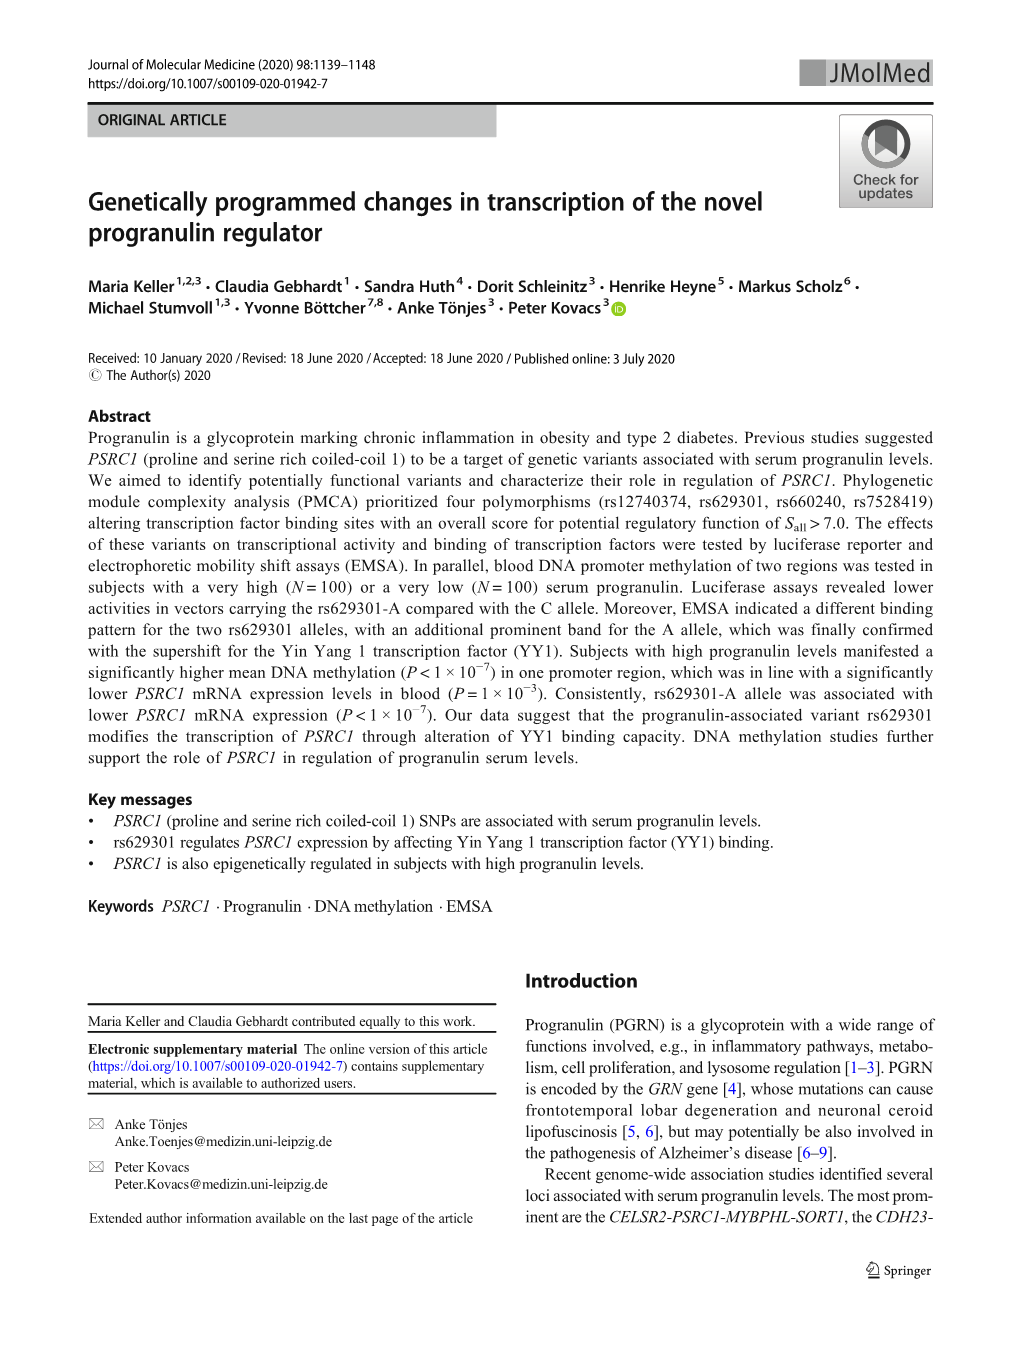 Genetically Programmed Changes in Transcription of the Novel Progranulin Regulator